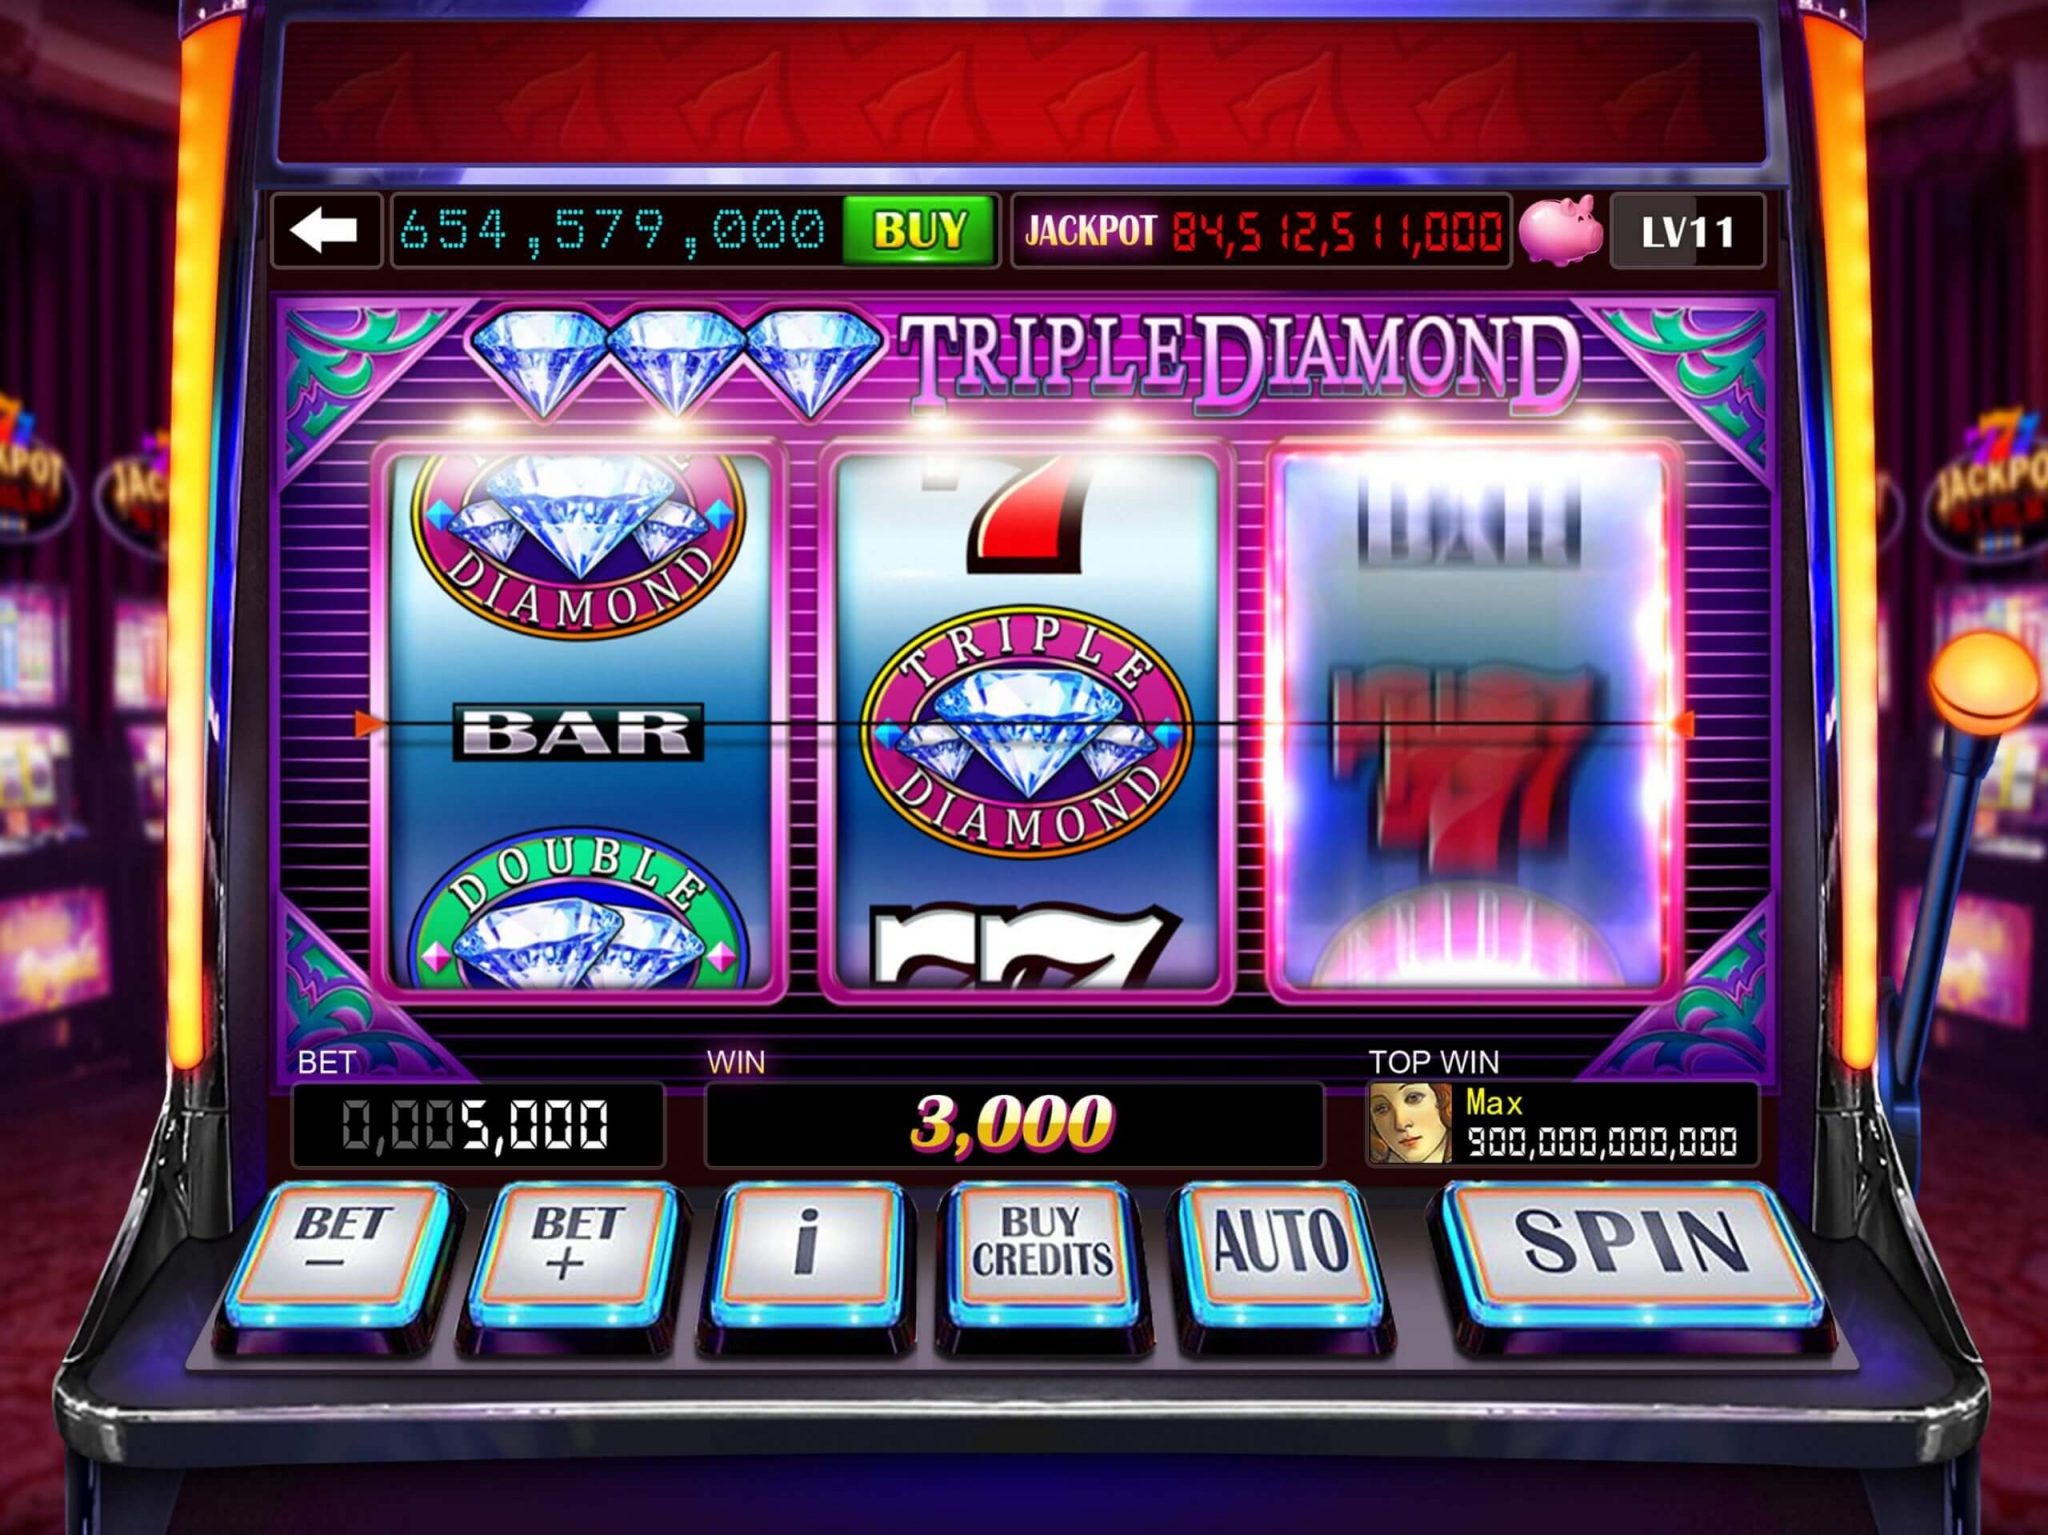 Play online casino games and win real money играть пасьянс карты замок